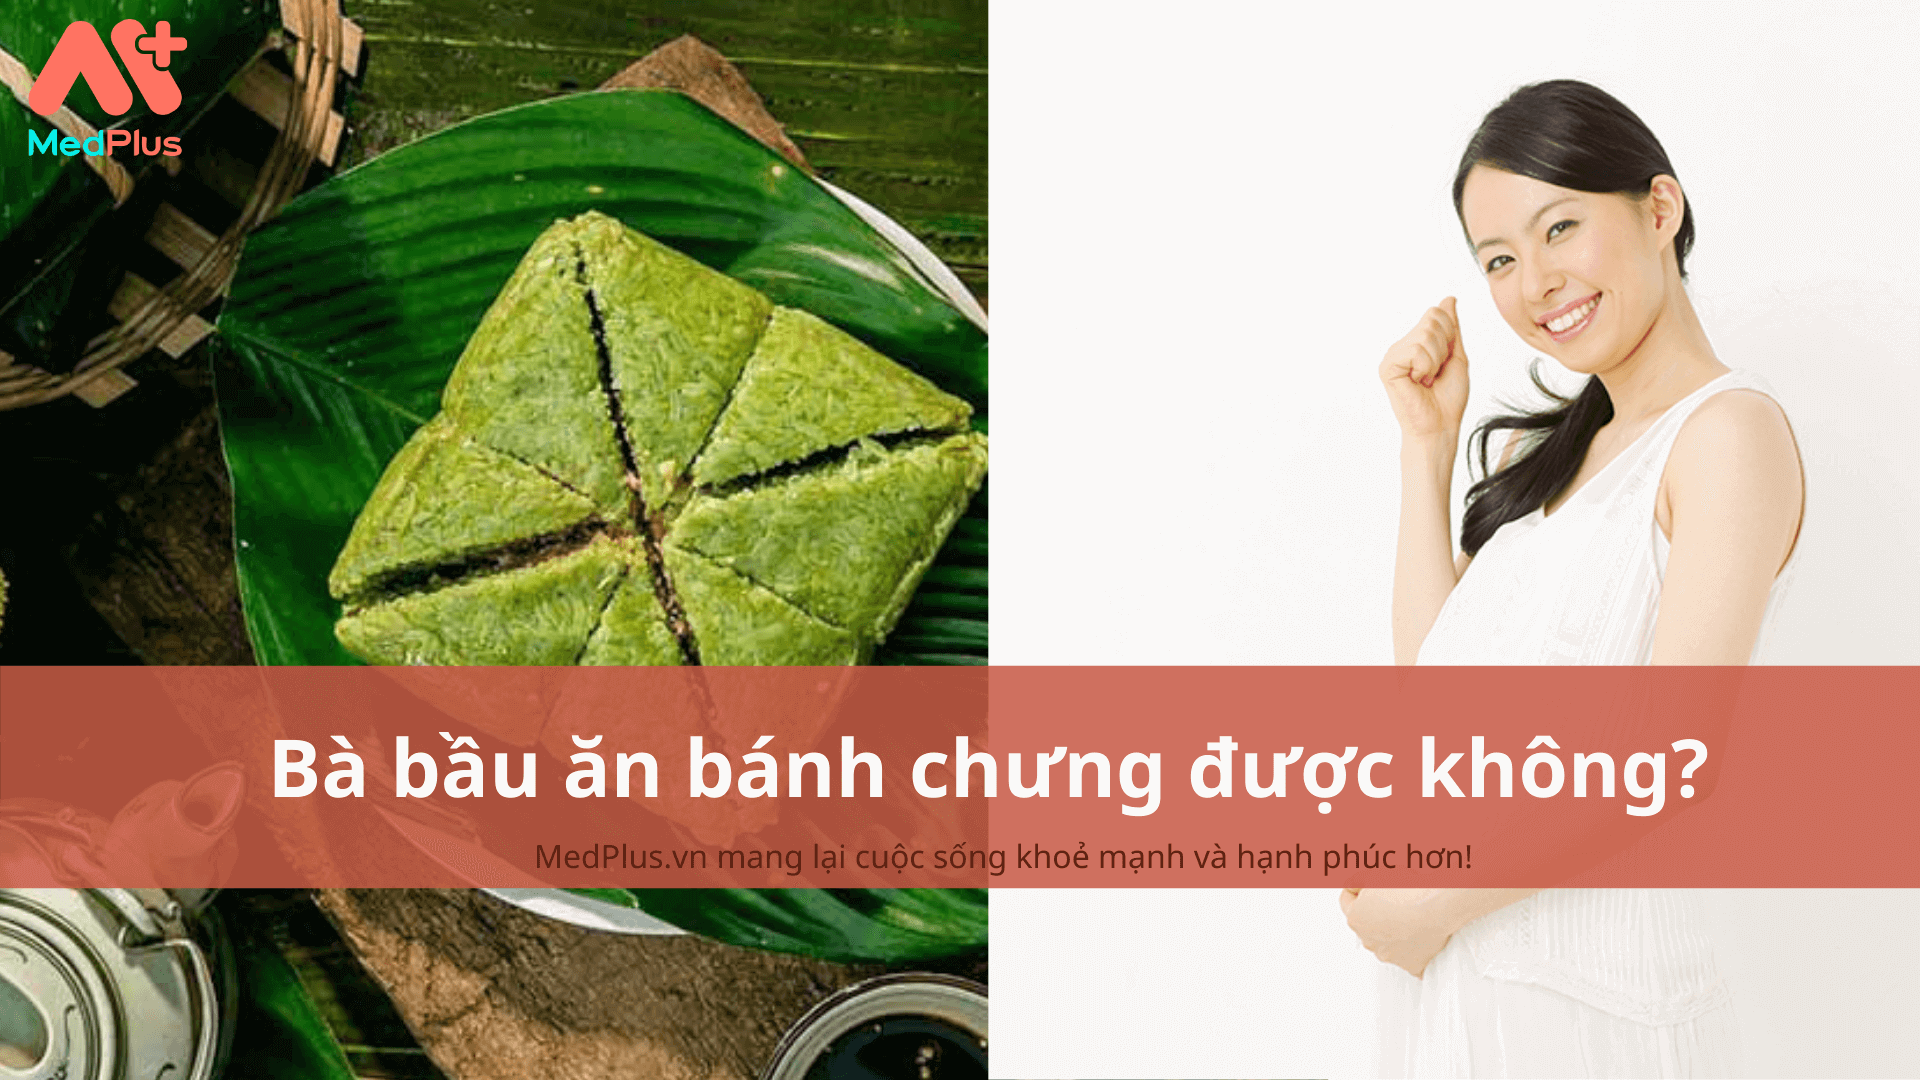 ba bau an banh chung duoc khong - Medplus